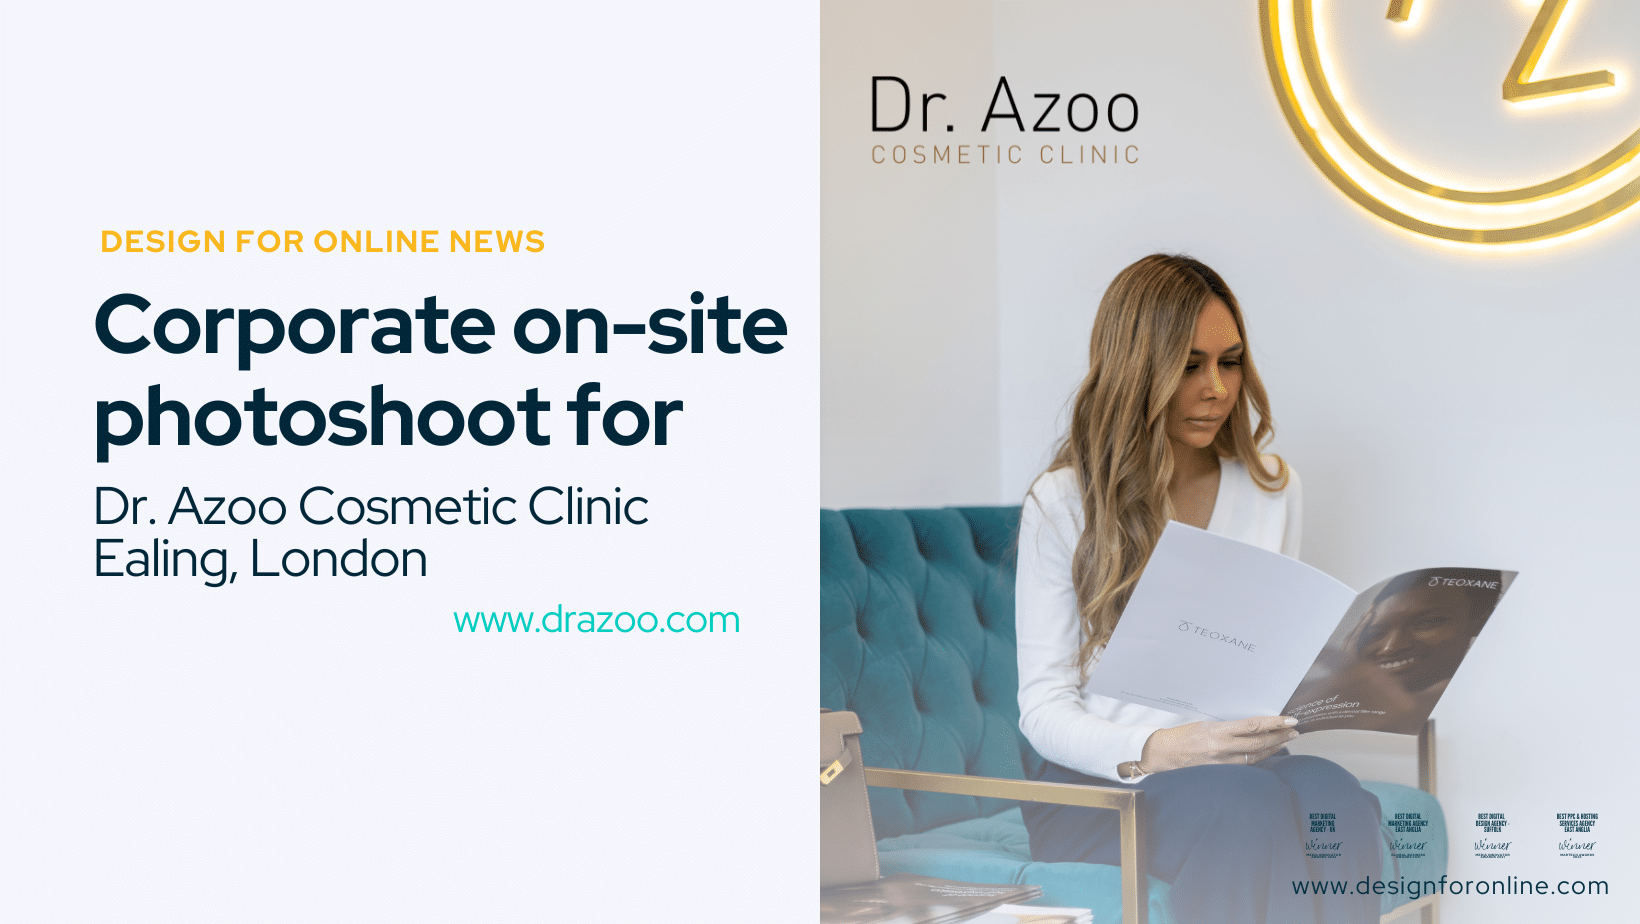 Dr Azoo Cosmetic Clinic London